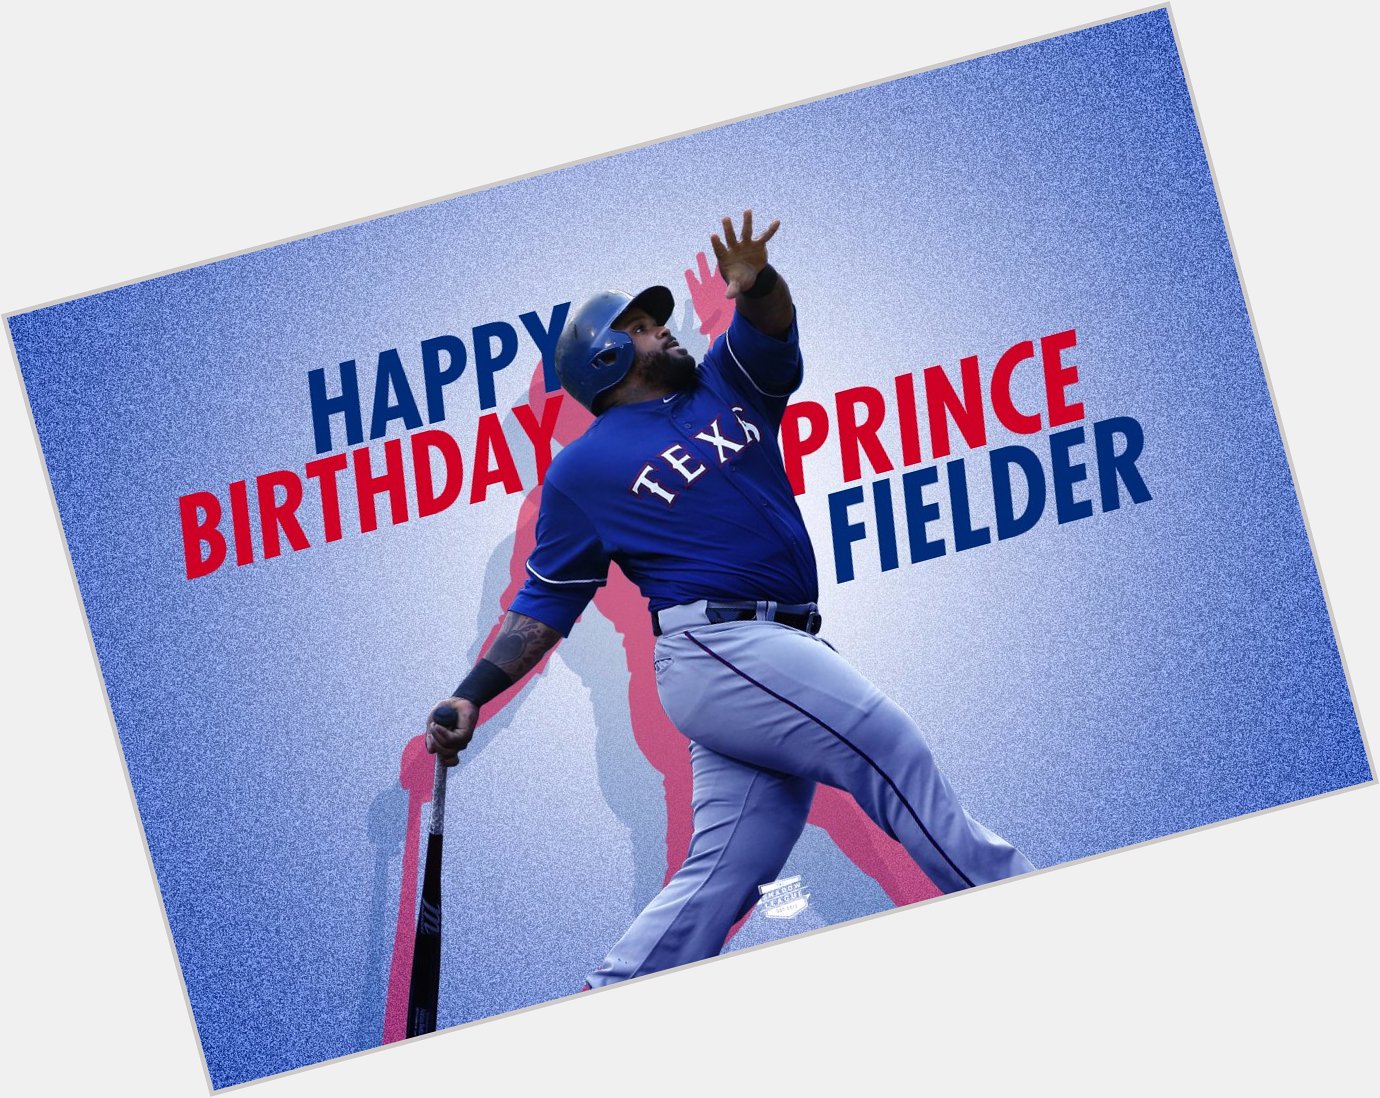 Happy Birthday to Prince Fielder! 